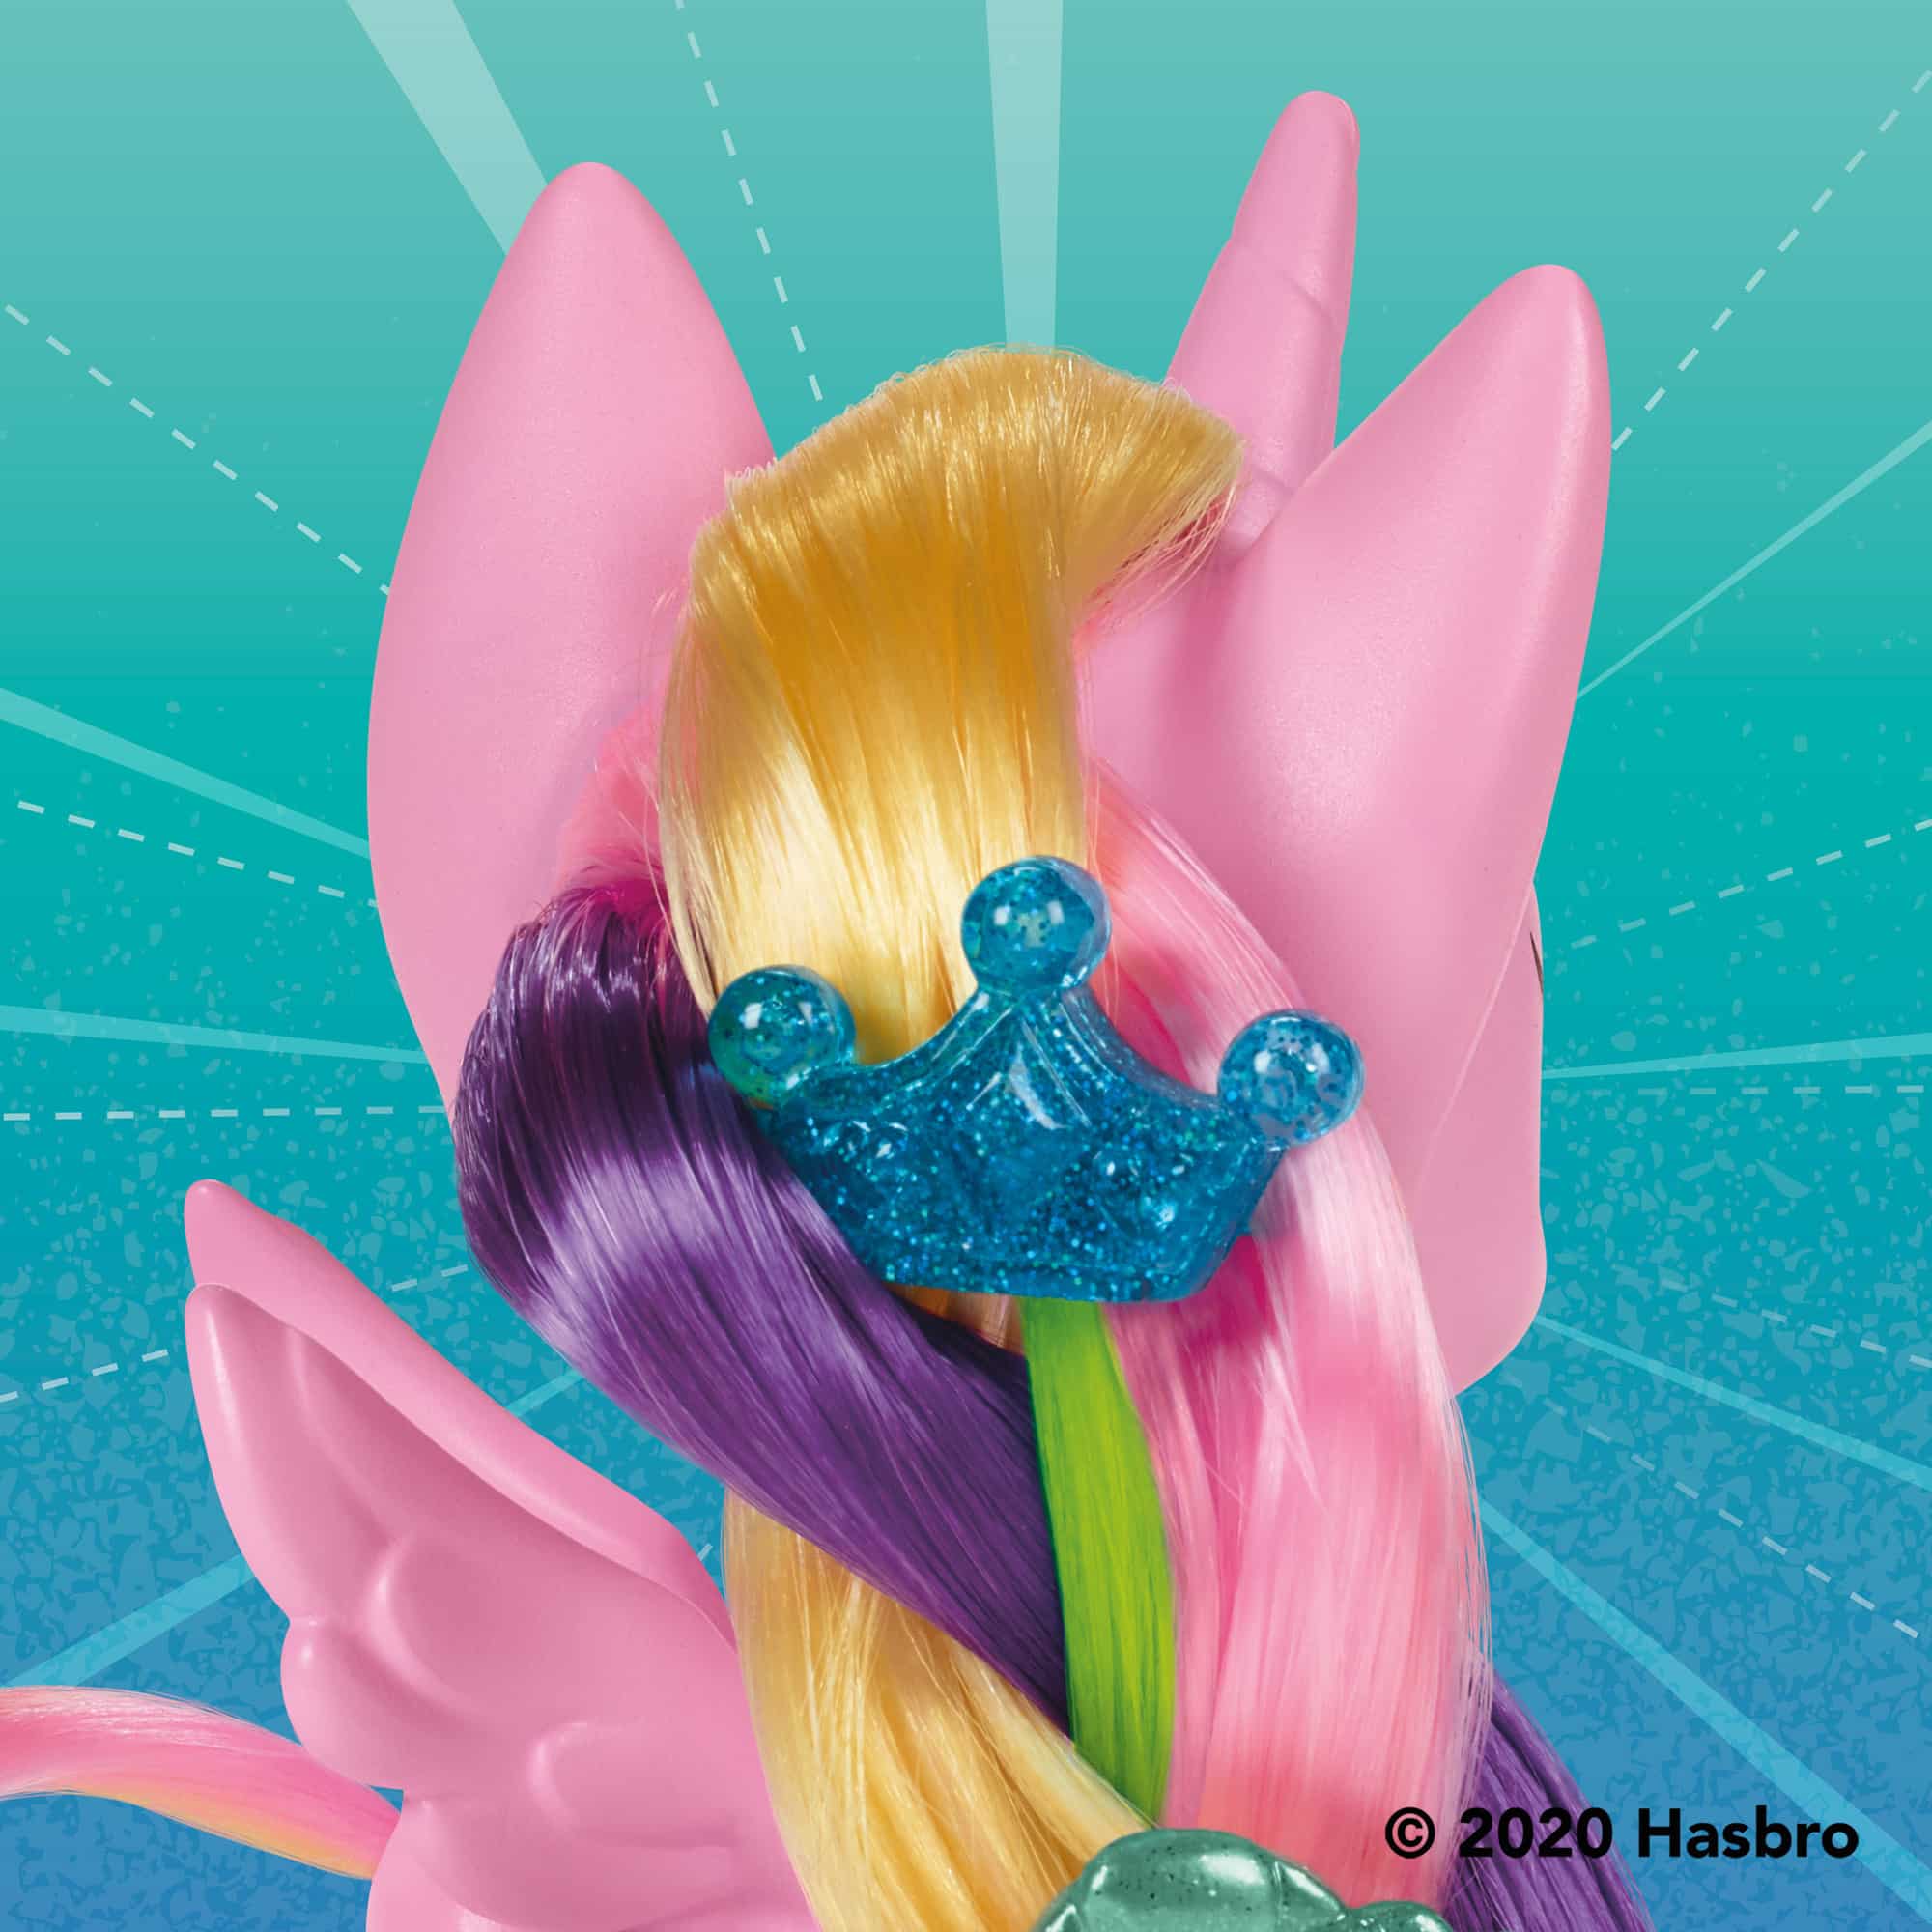 My Little Pony - Princess Cadance - Best Hair Day